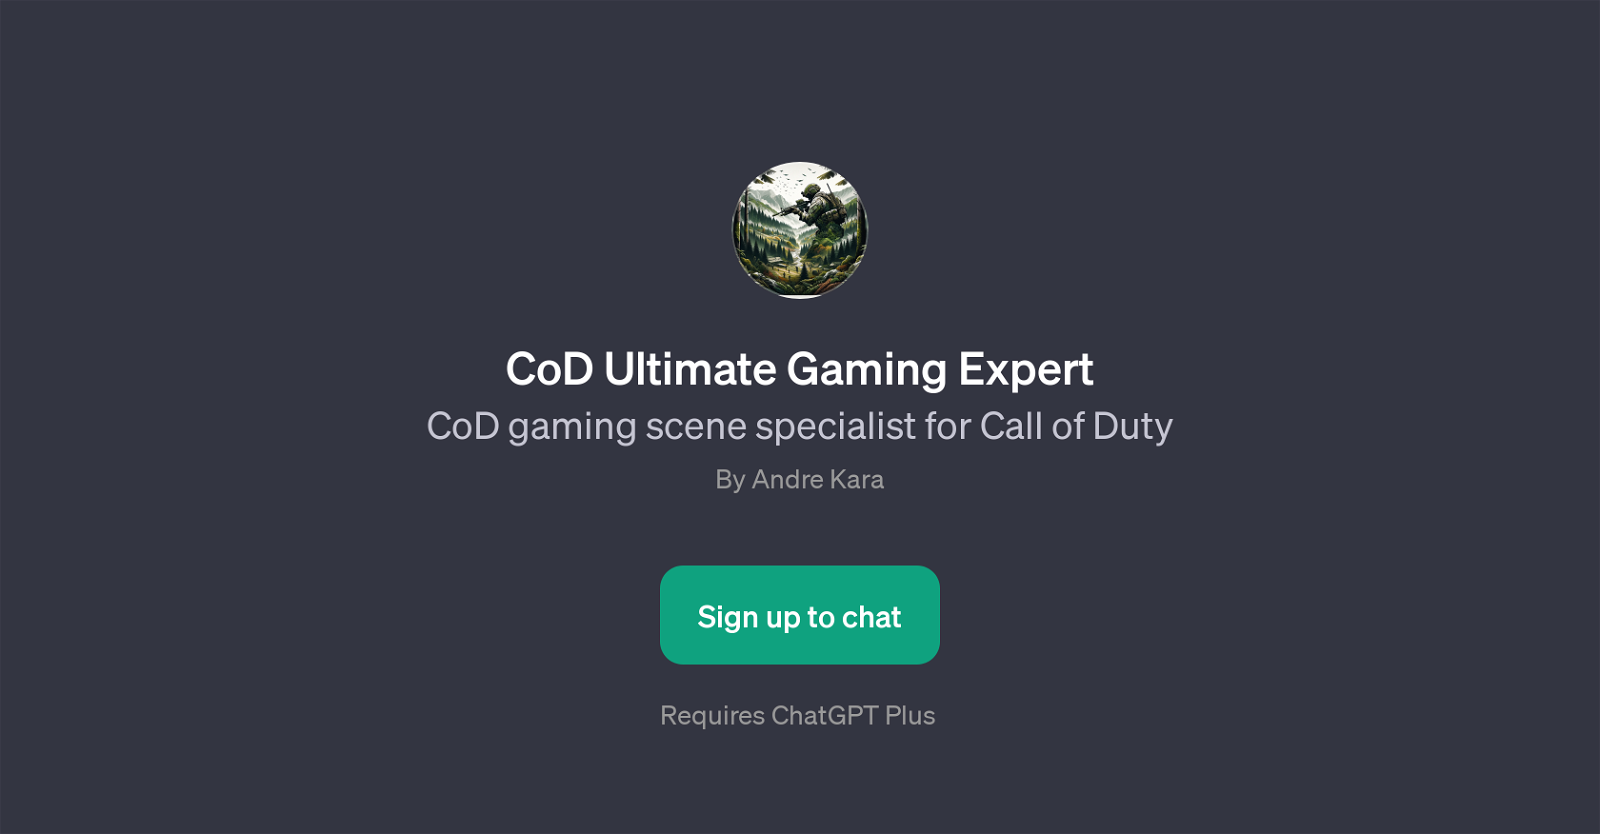 CoD Ultimate Gaming Expert website